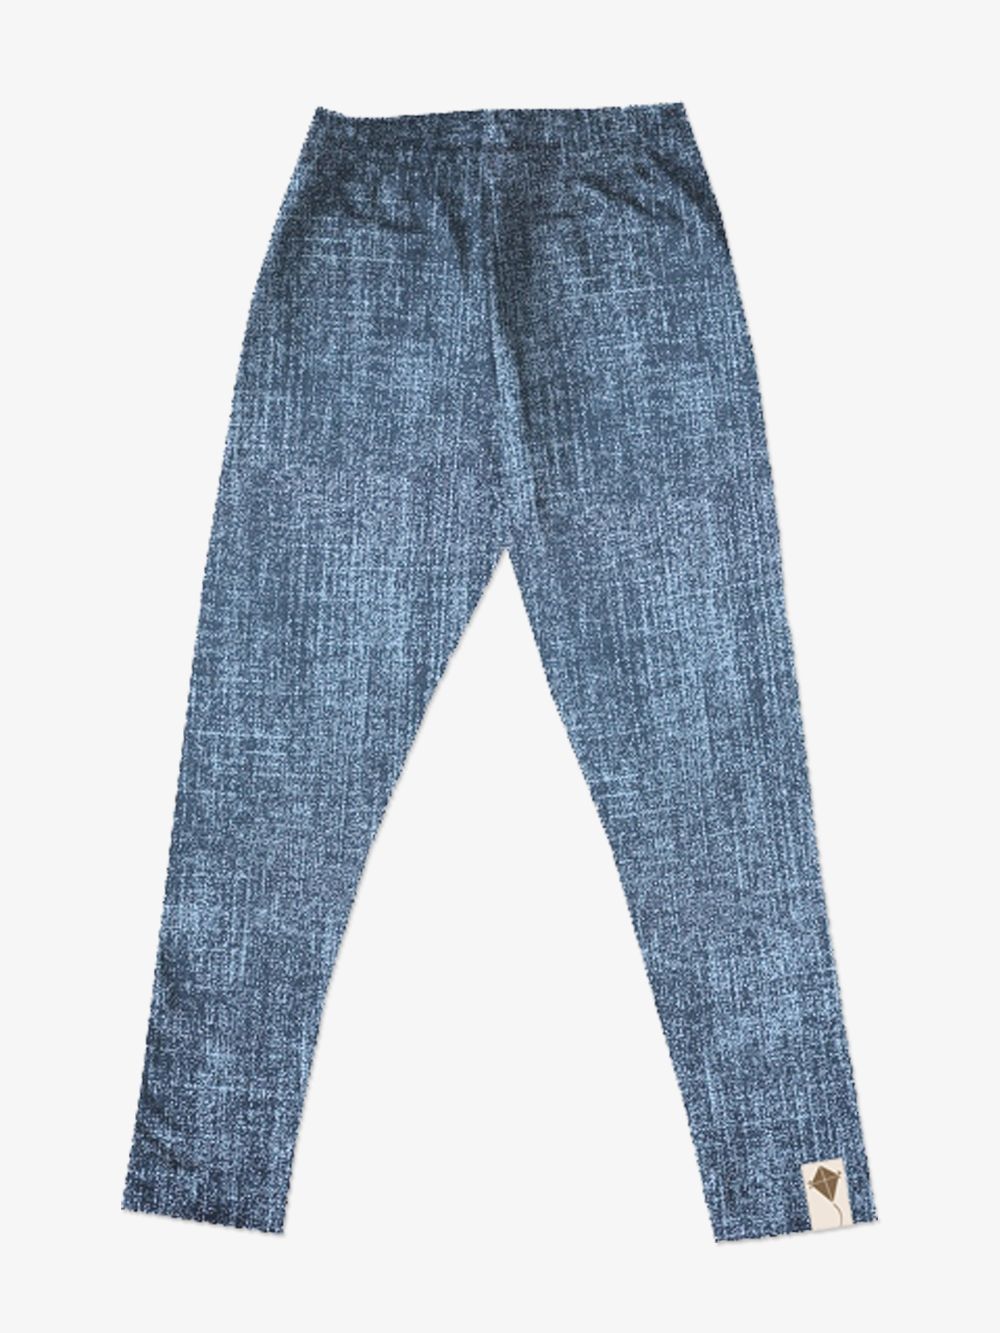 Legíny Jeans - hrubé